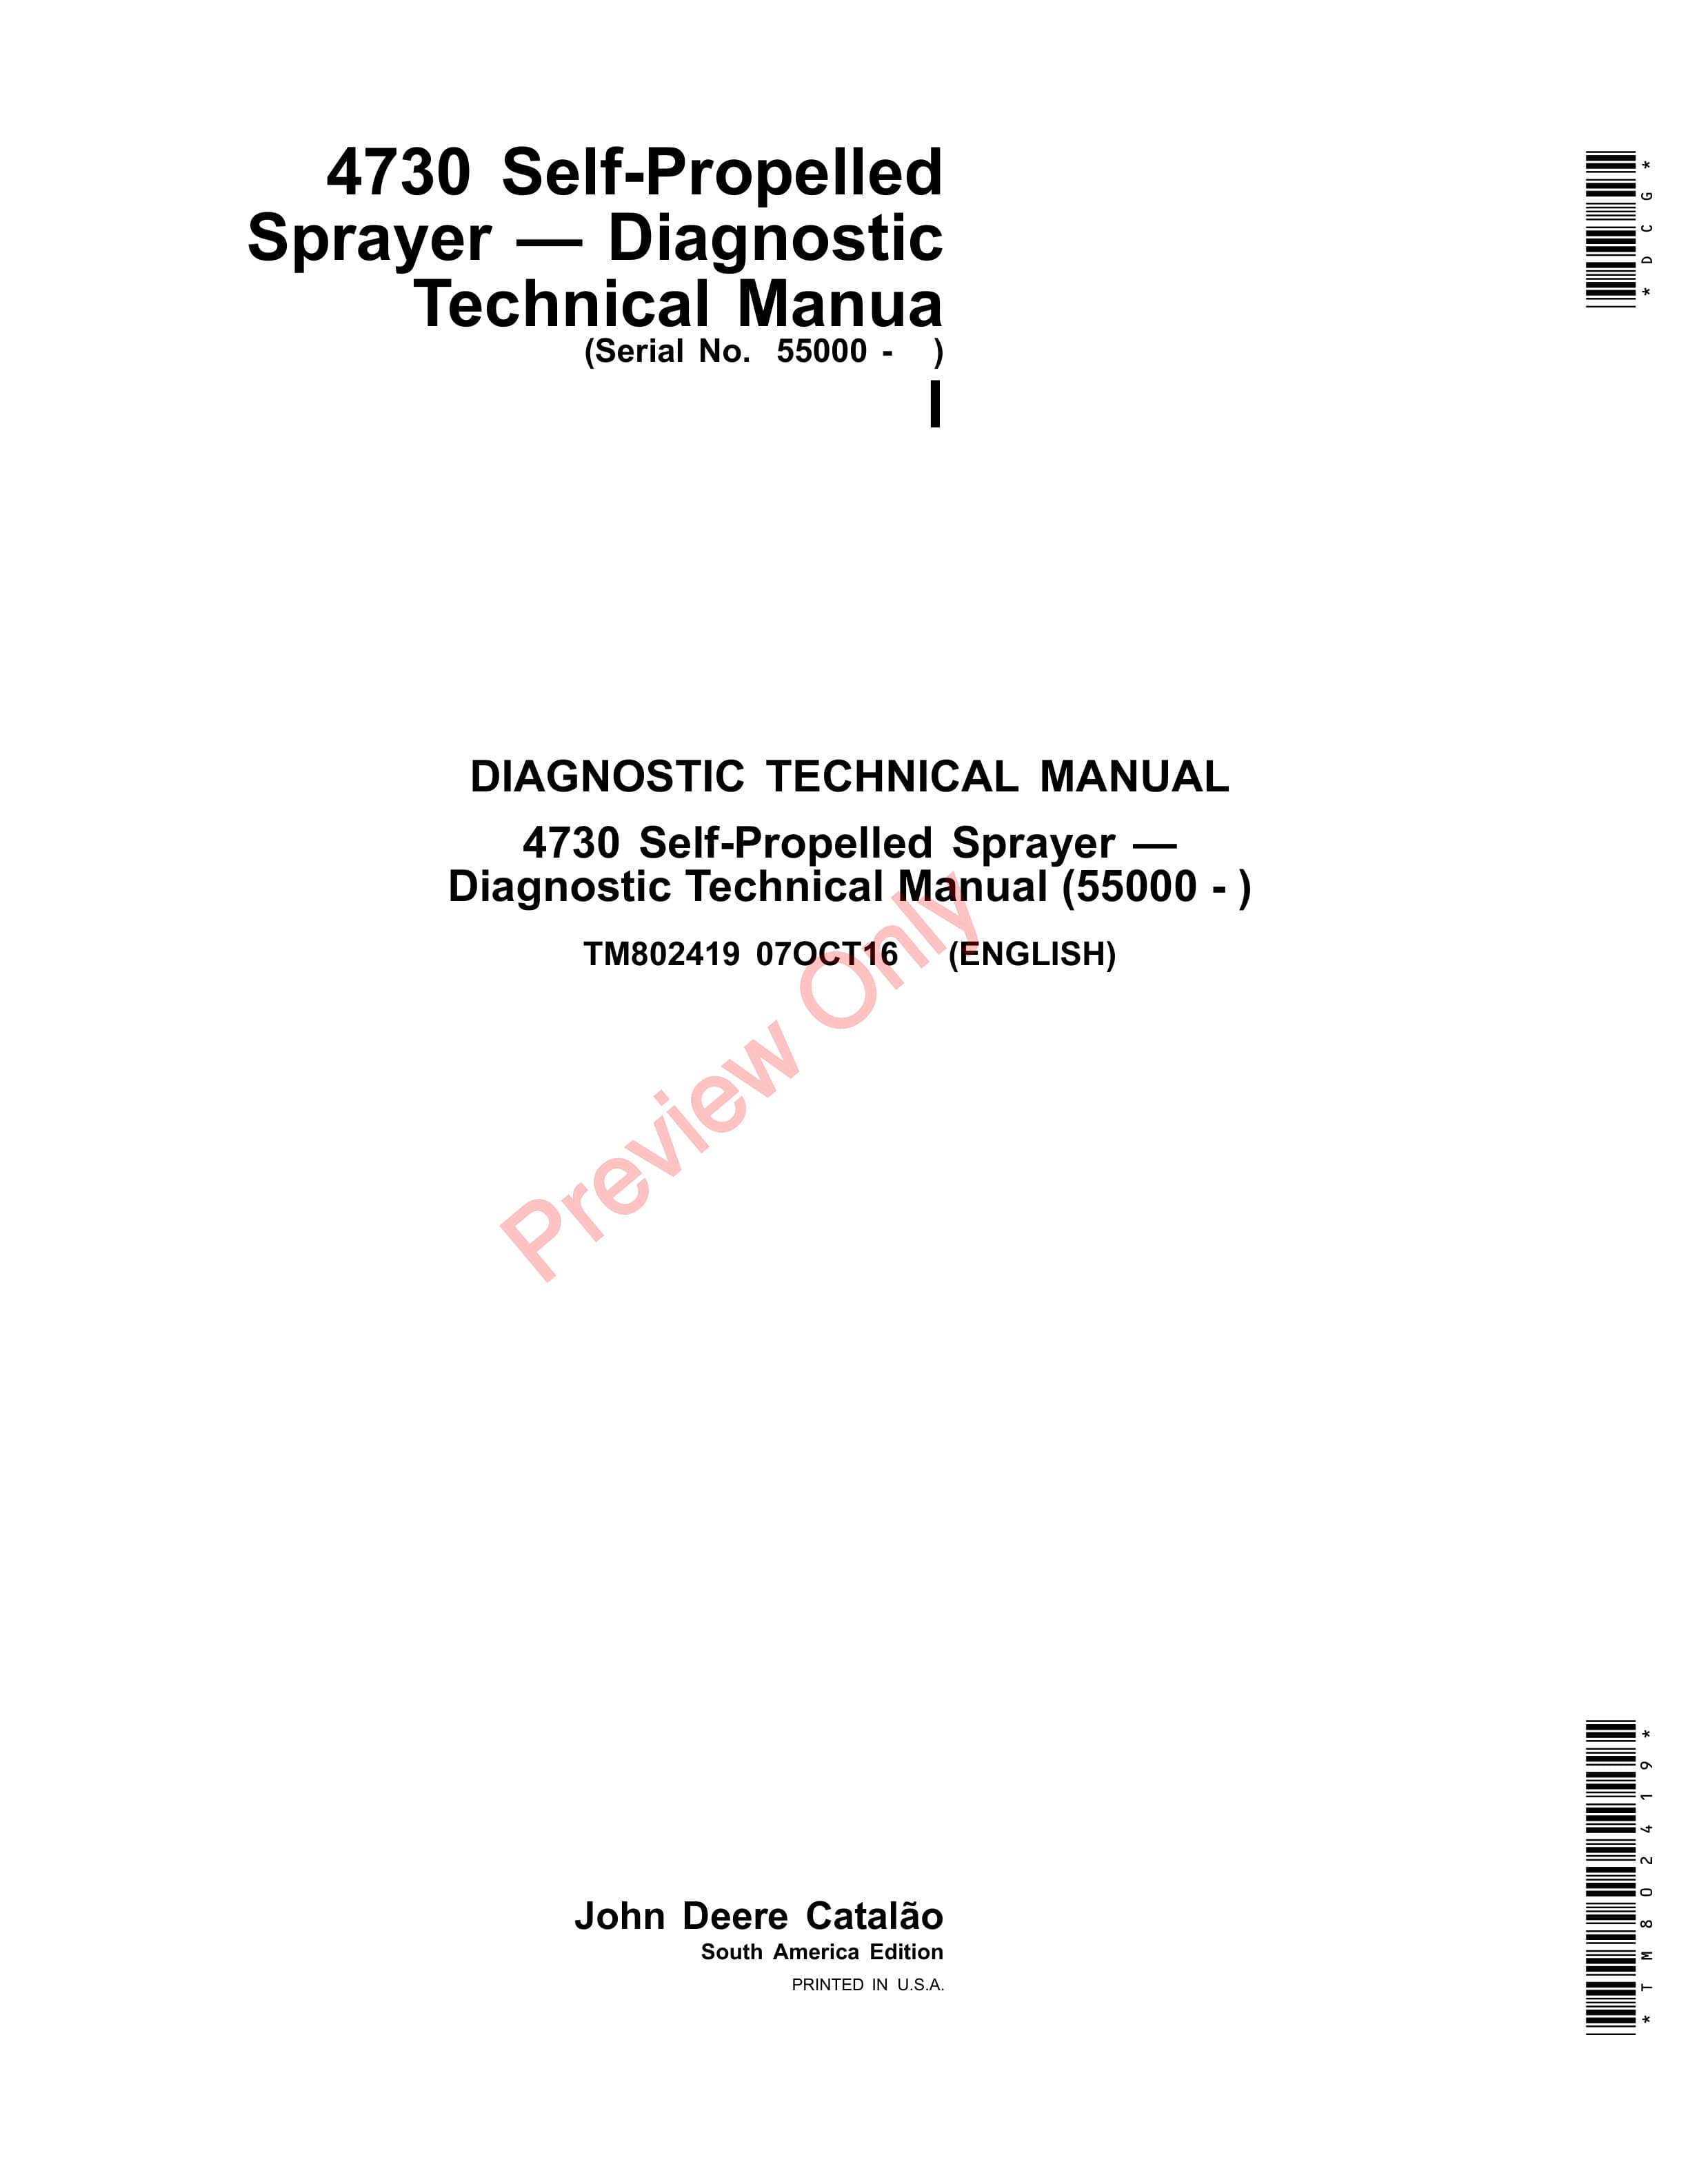 John Deere 4730 Self Propelled Sprayer Diagnostic Technical Manual TM802419 01FEB17 1